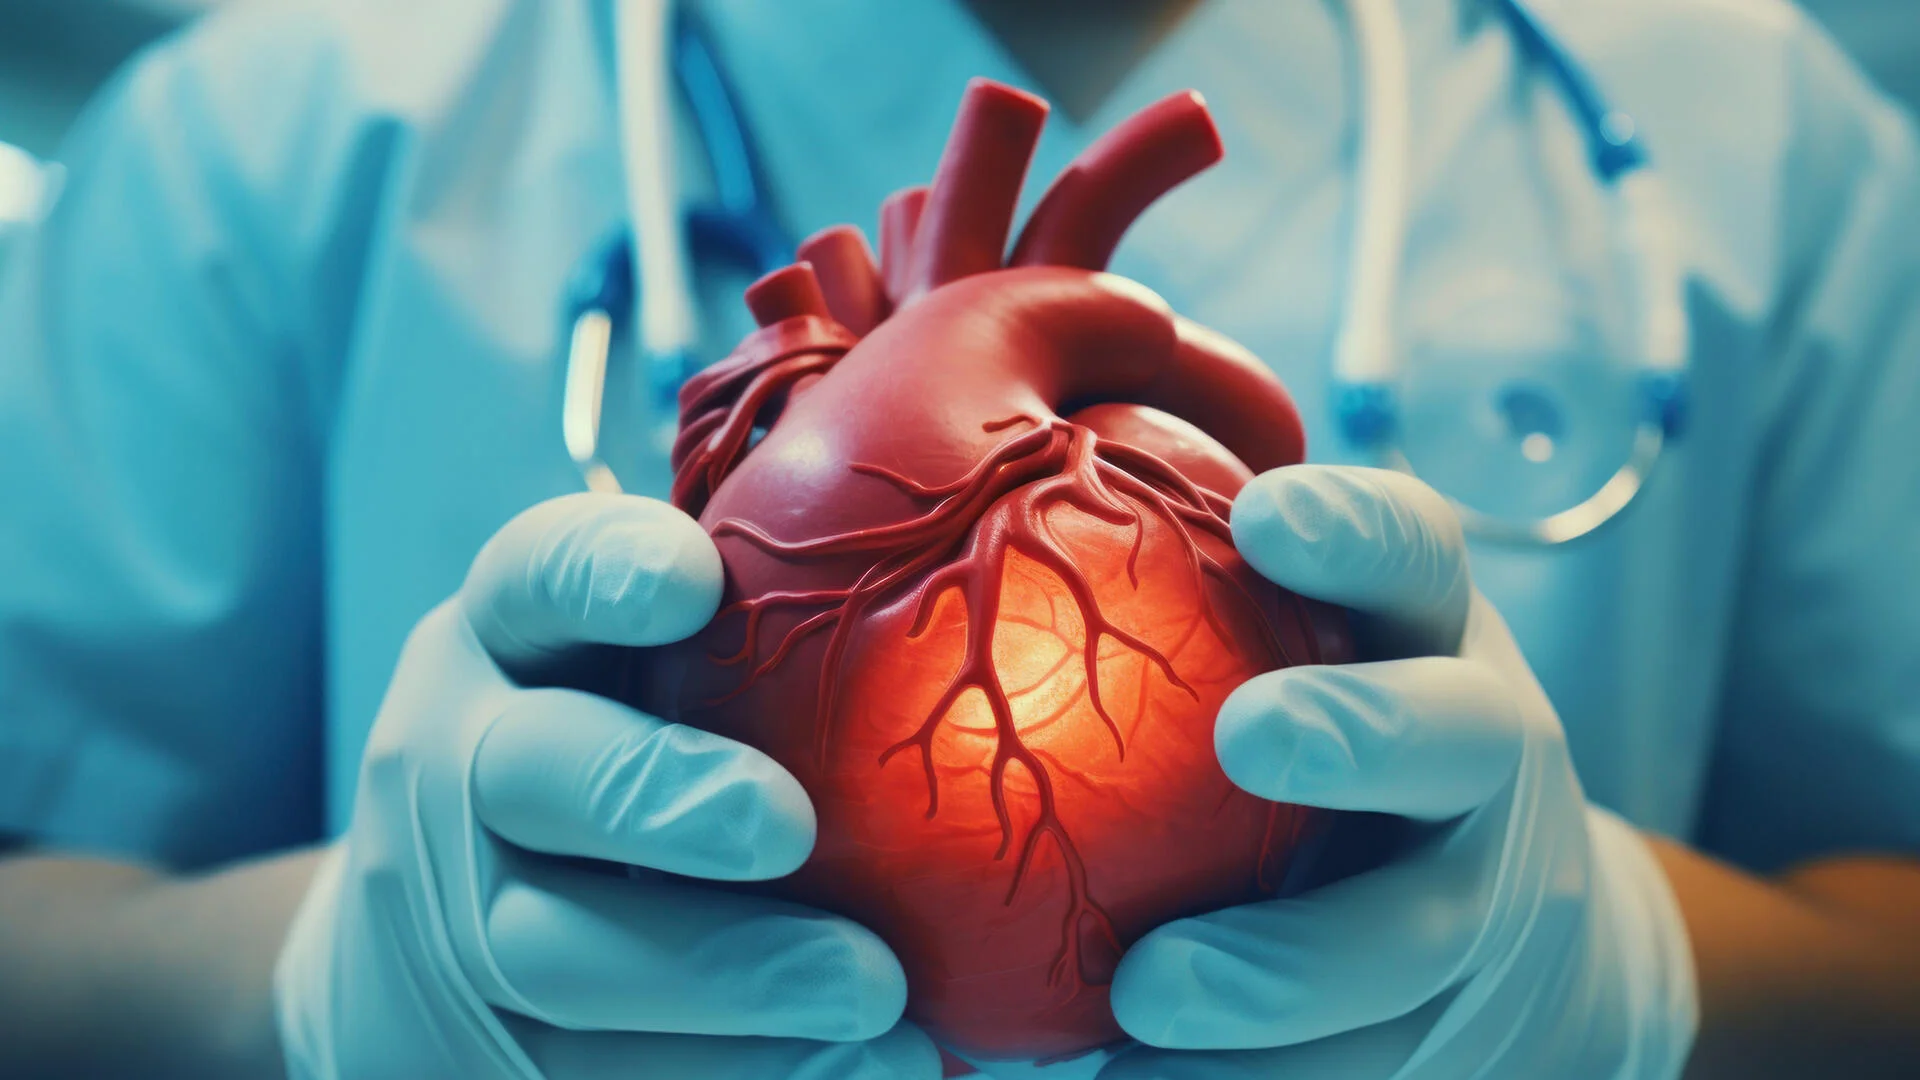 Illustration of surgeon holding a heart